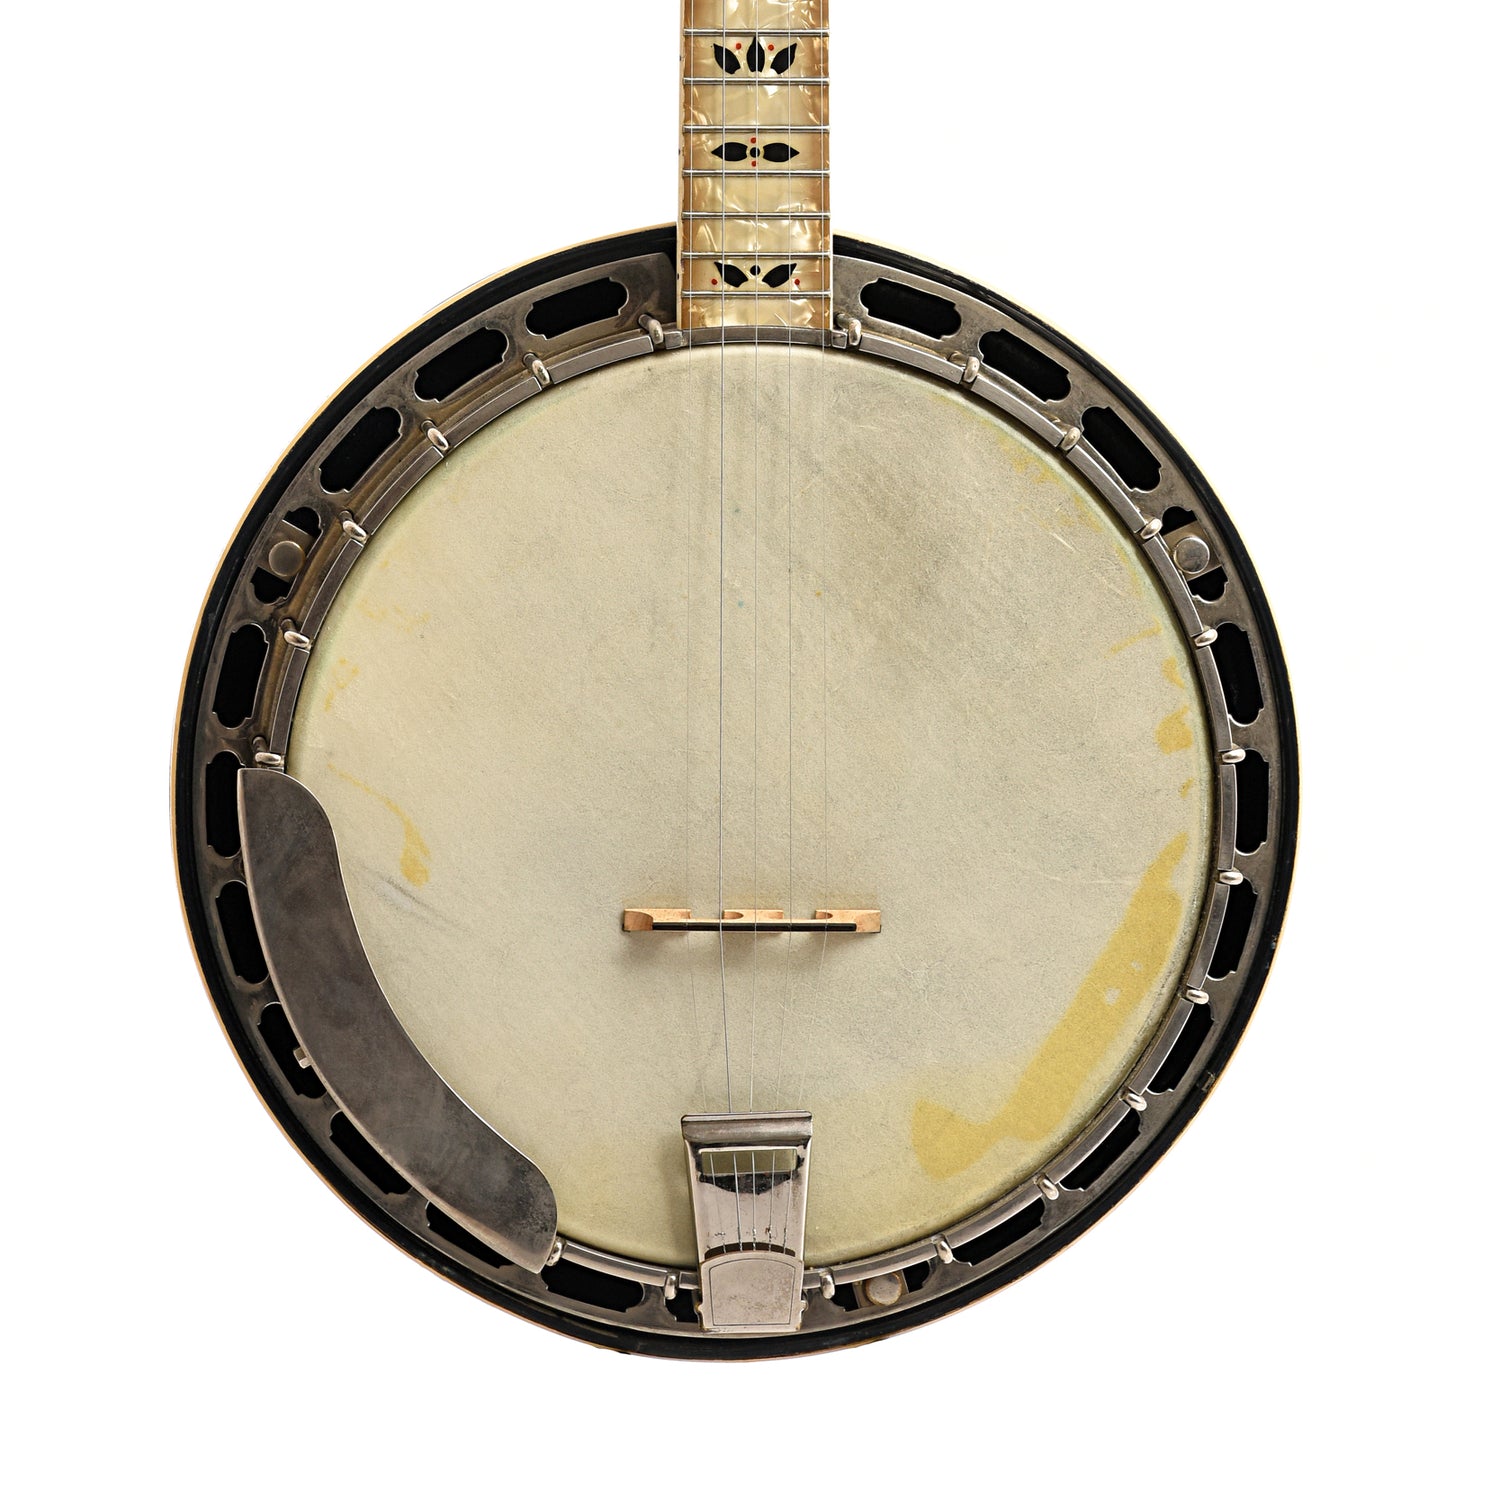 Image 1 of Gibson TB-11 Conversion (1930s) - SKU# 70U-210190 : Product Type Resonator Back Banjos : Elderly Instruments